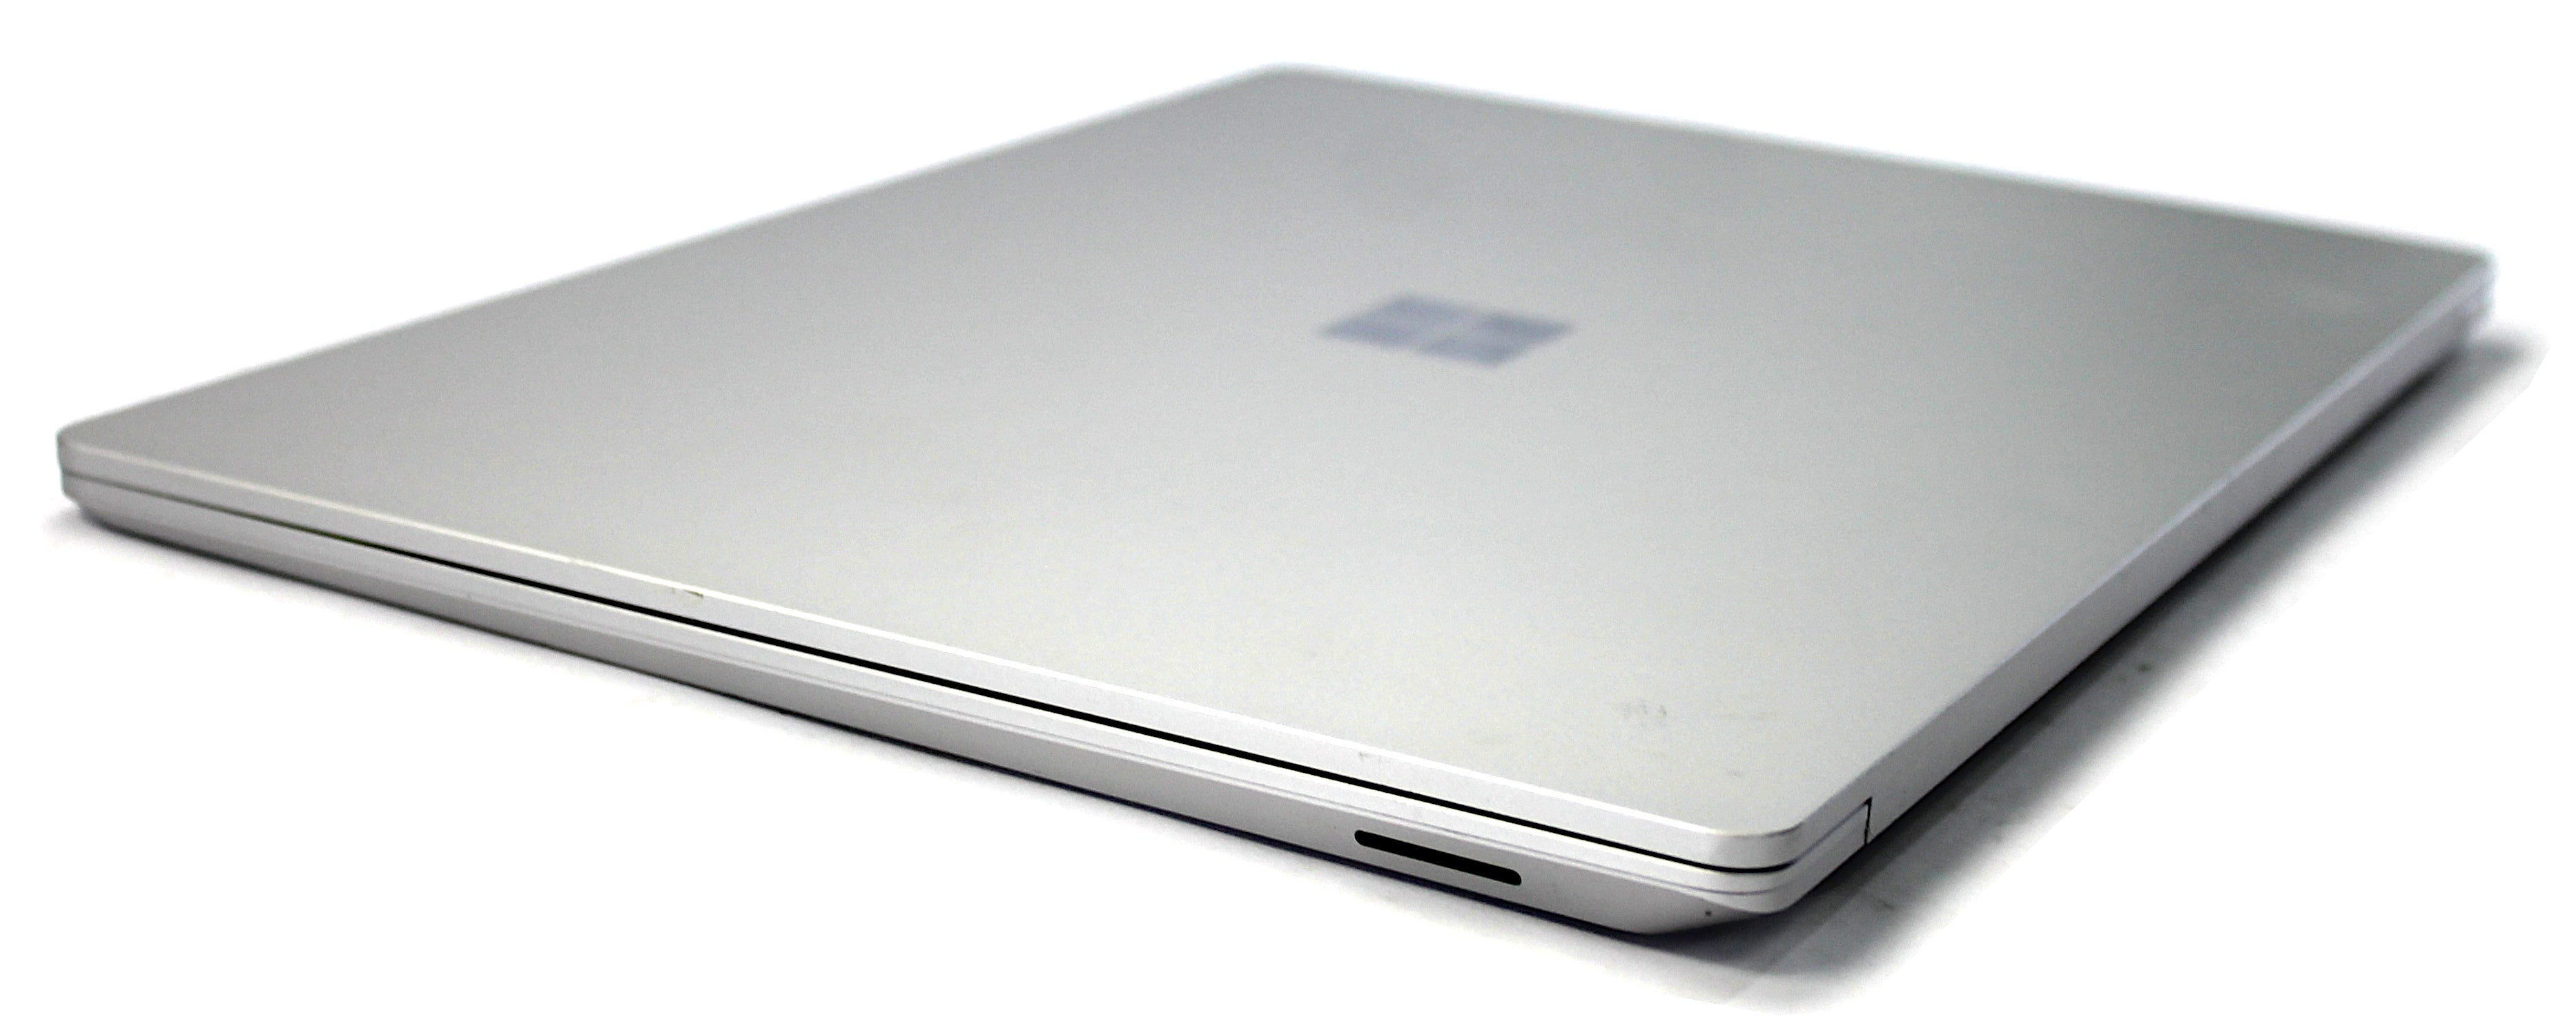 Microsoft Surface Laptop 3, 15" Ryzen 5, 8GB RAM, 256GB SSD, Silver, 1873